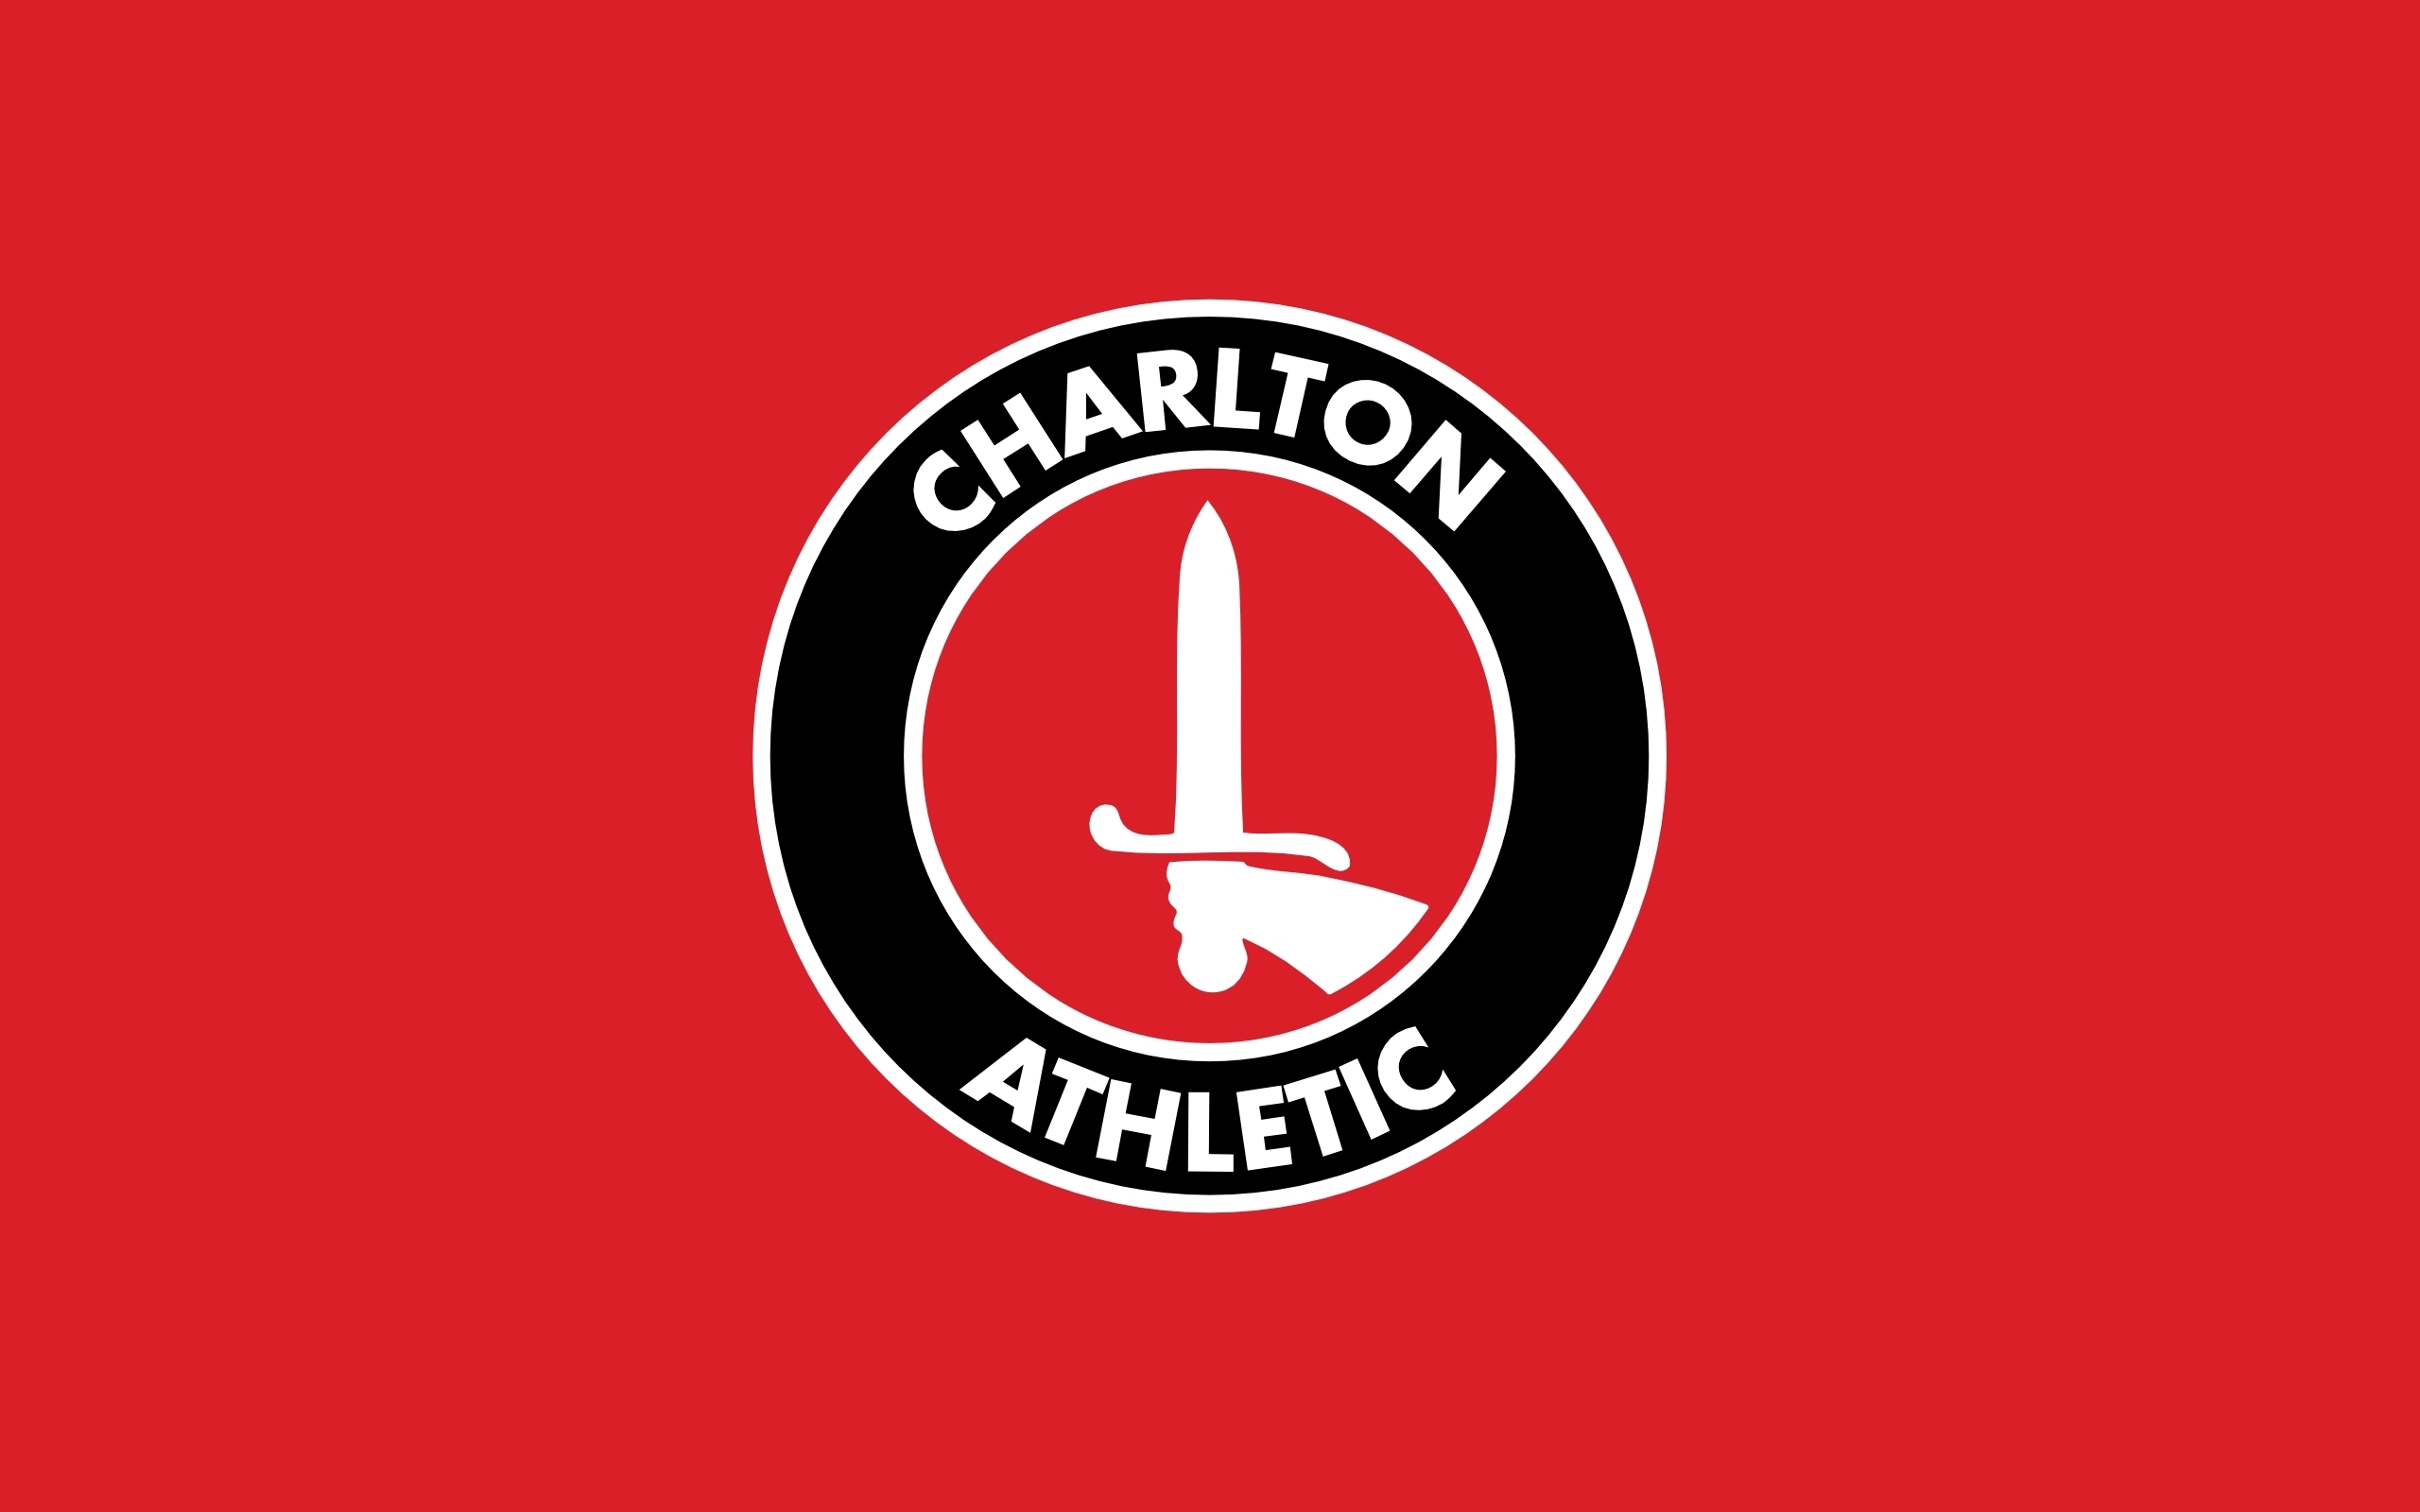 Charlton Athletic Primary logo t shirt iron on transfers